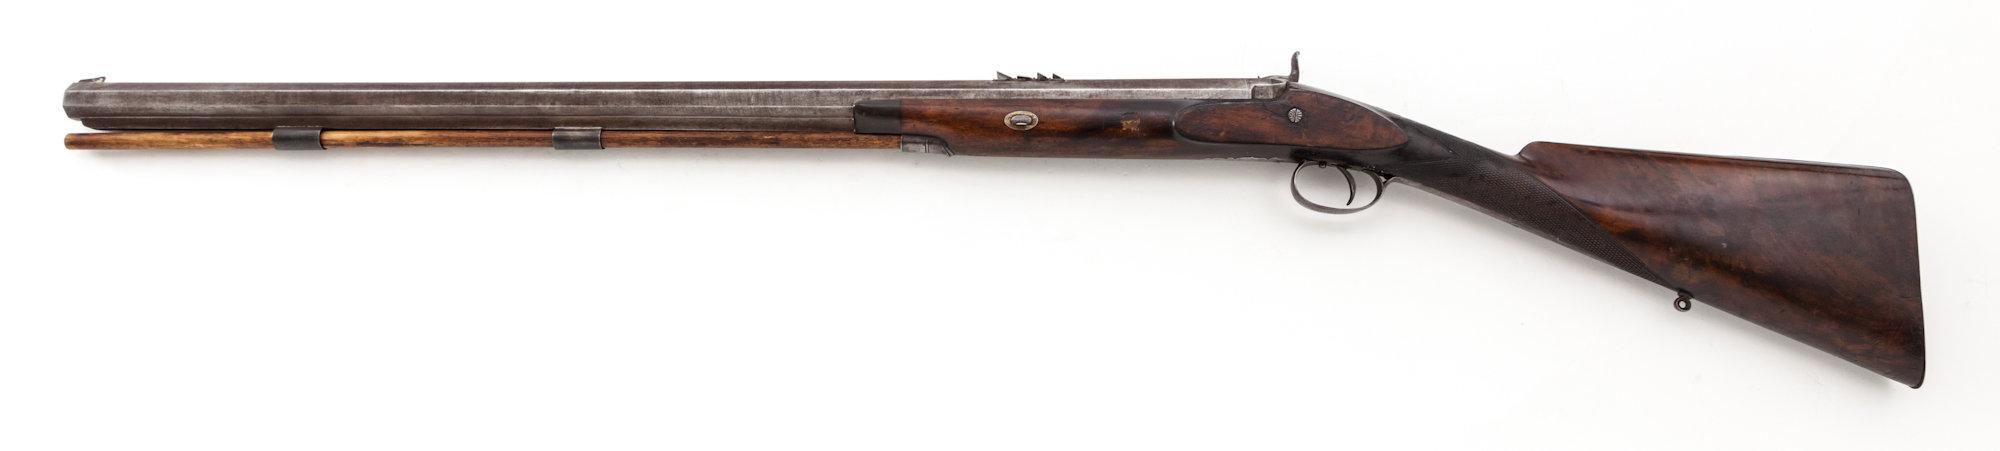 Early Large Bore English Perc. Sporting Rifle